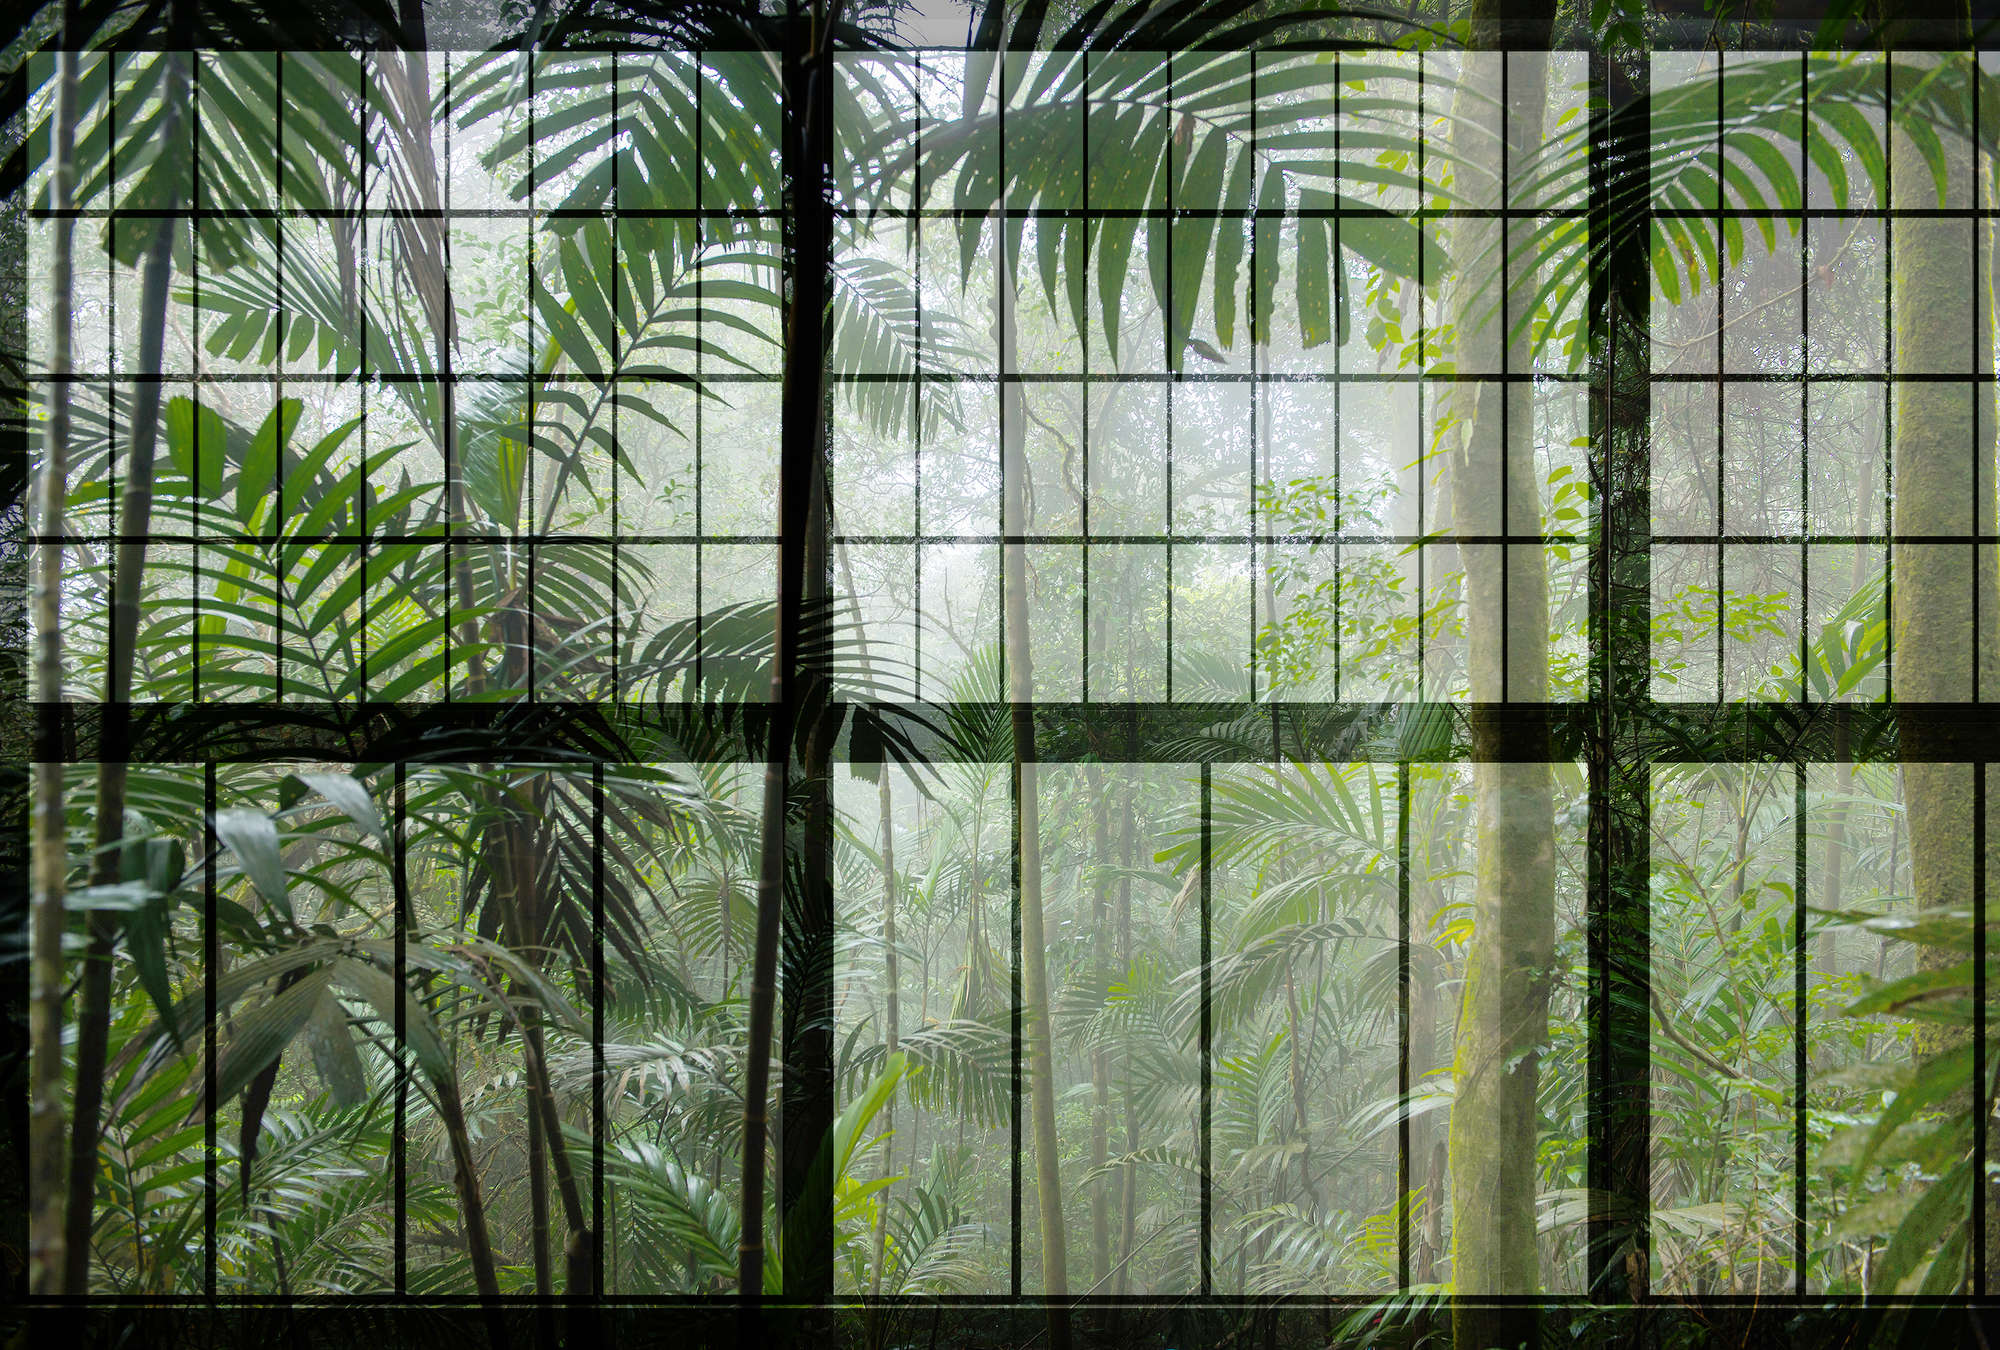             Rainforest 1 - Loft Window Wallpaper with Jungle View - Green, Black | Textured Non-woven
        